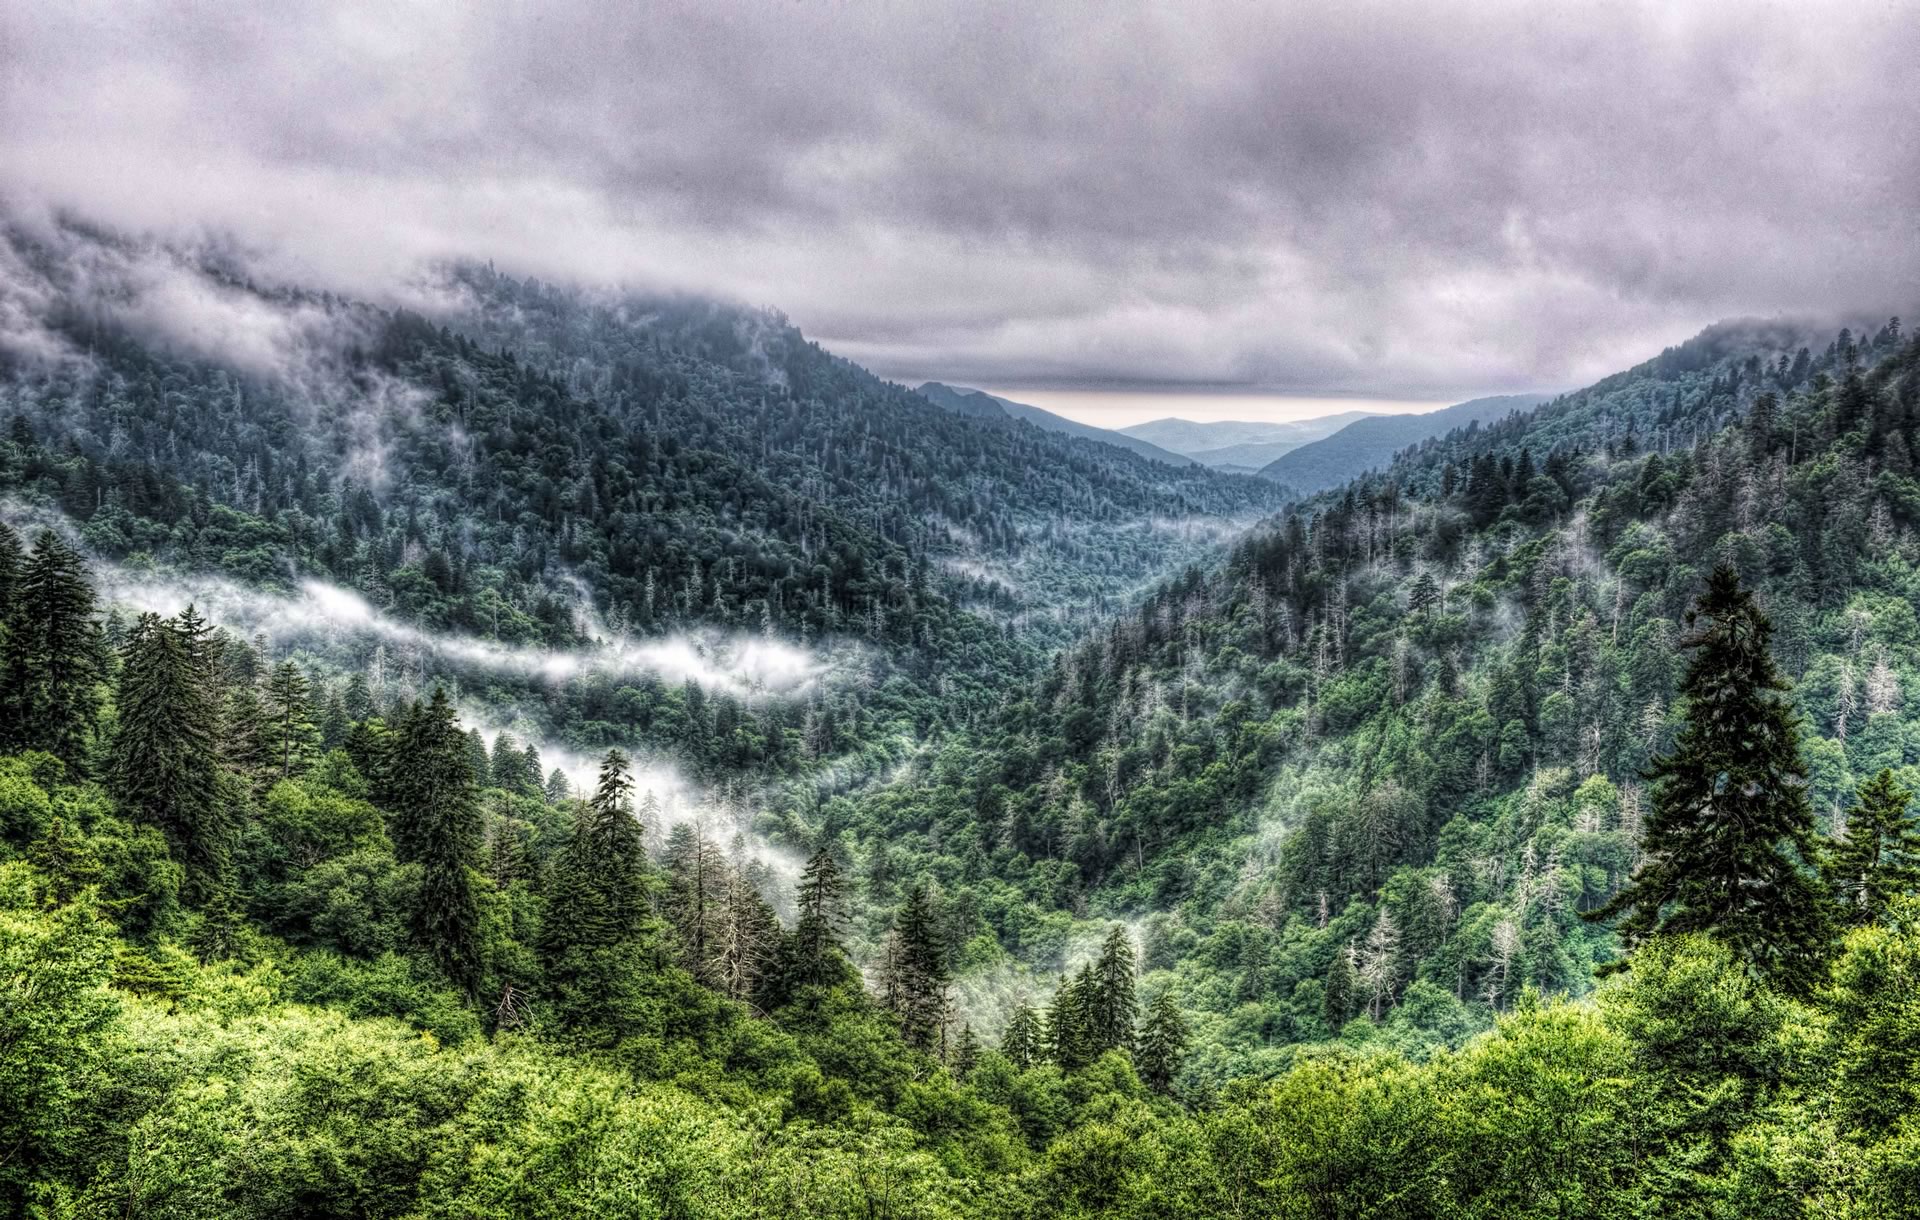 download wallpaper: Great Smoky Mountains national park wallpaper